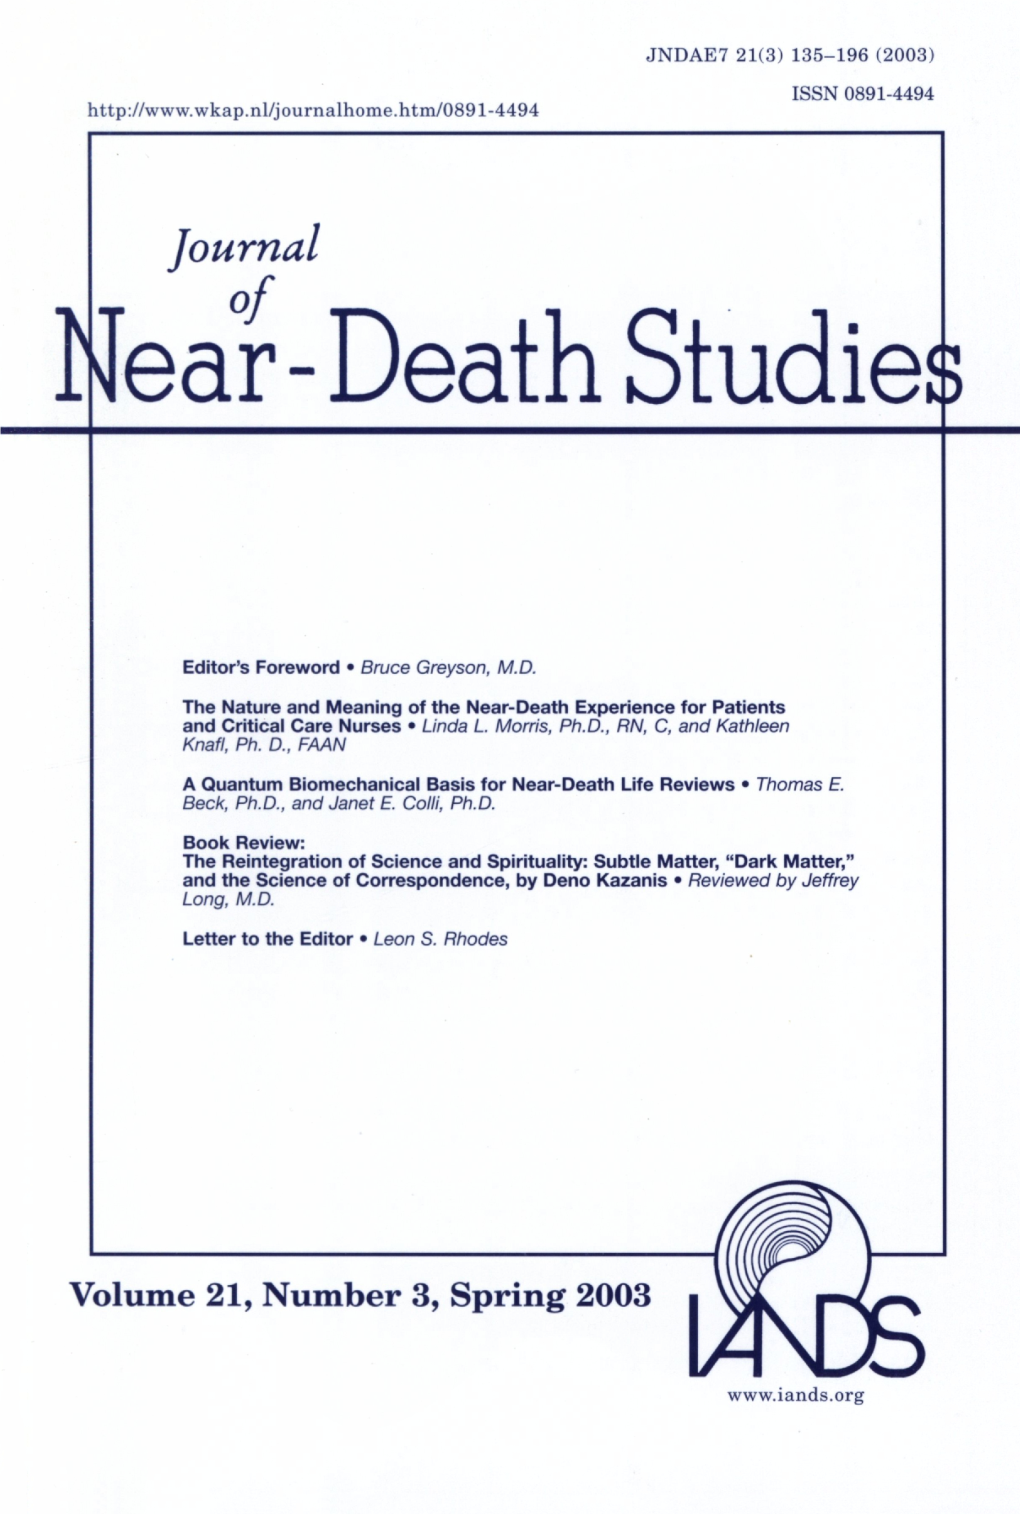 Ear-Death Studiesi